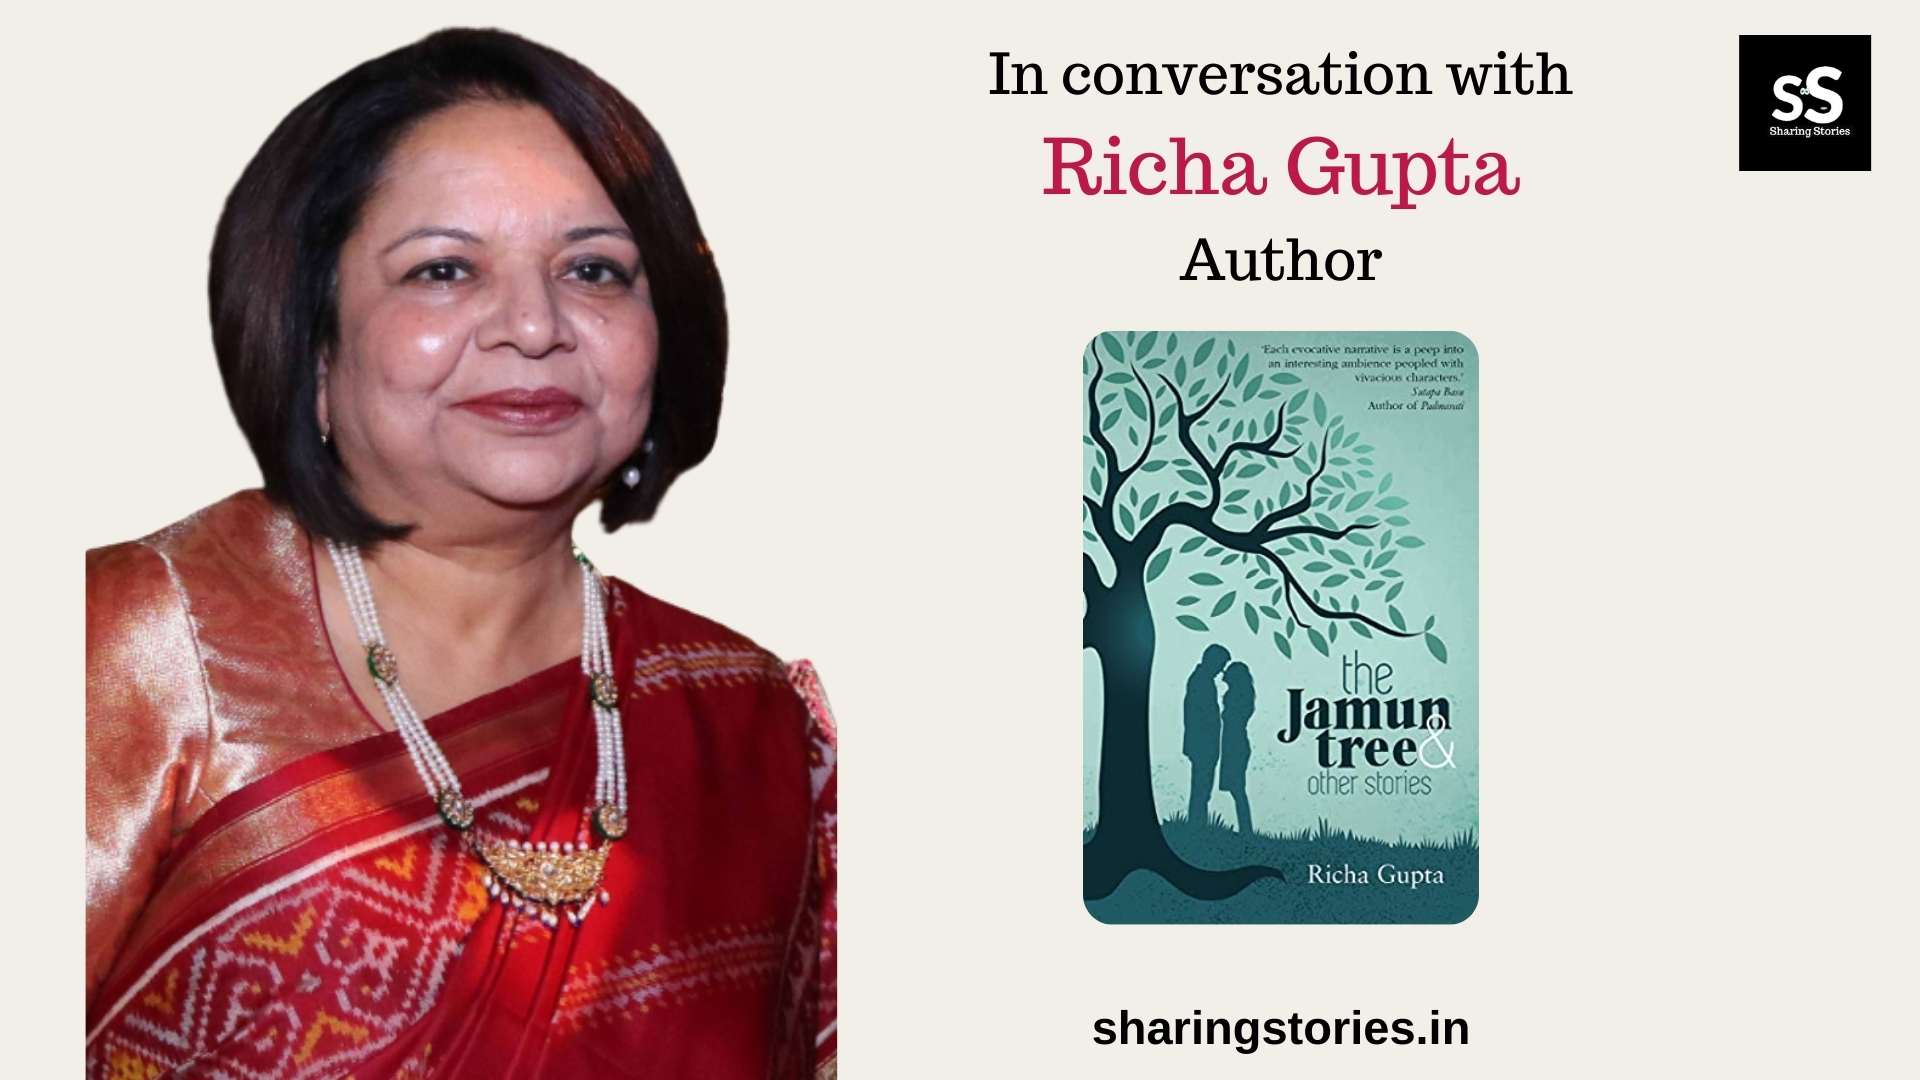 Author Richa Gupta